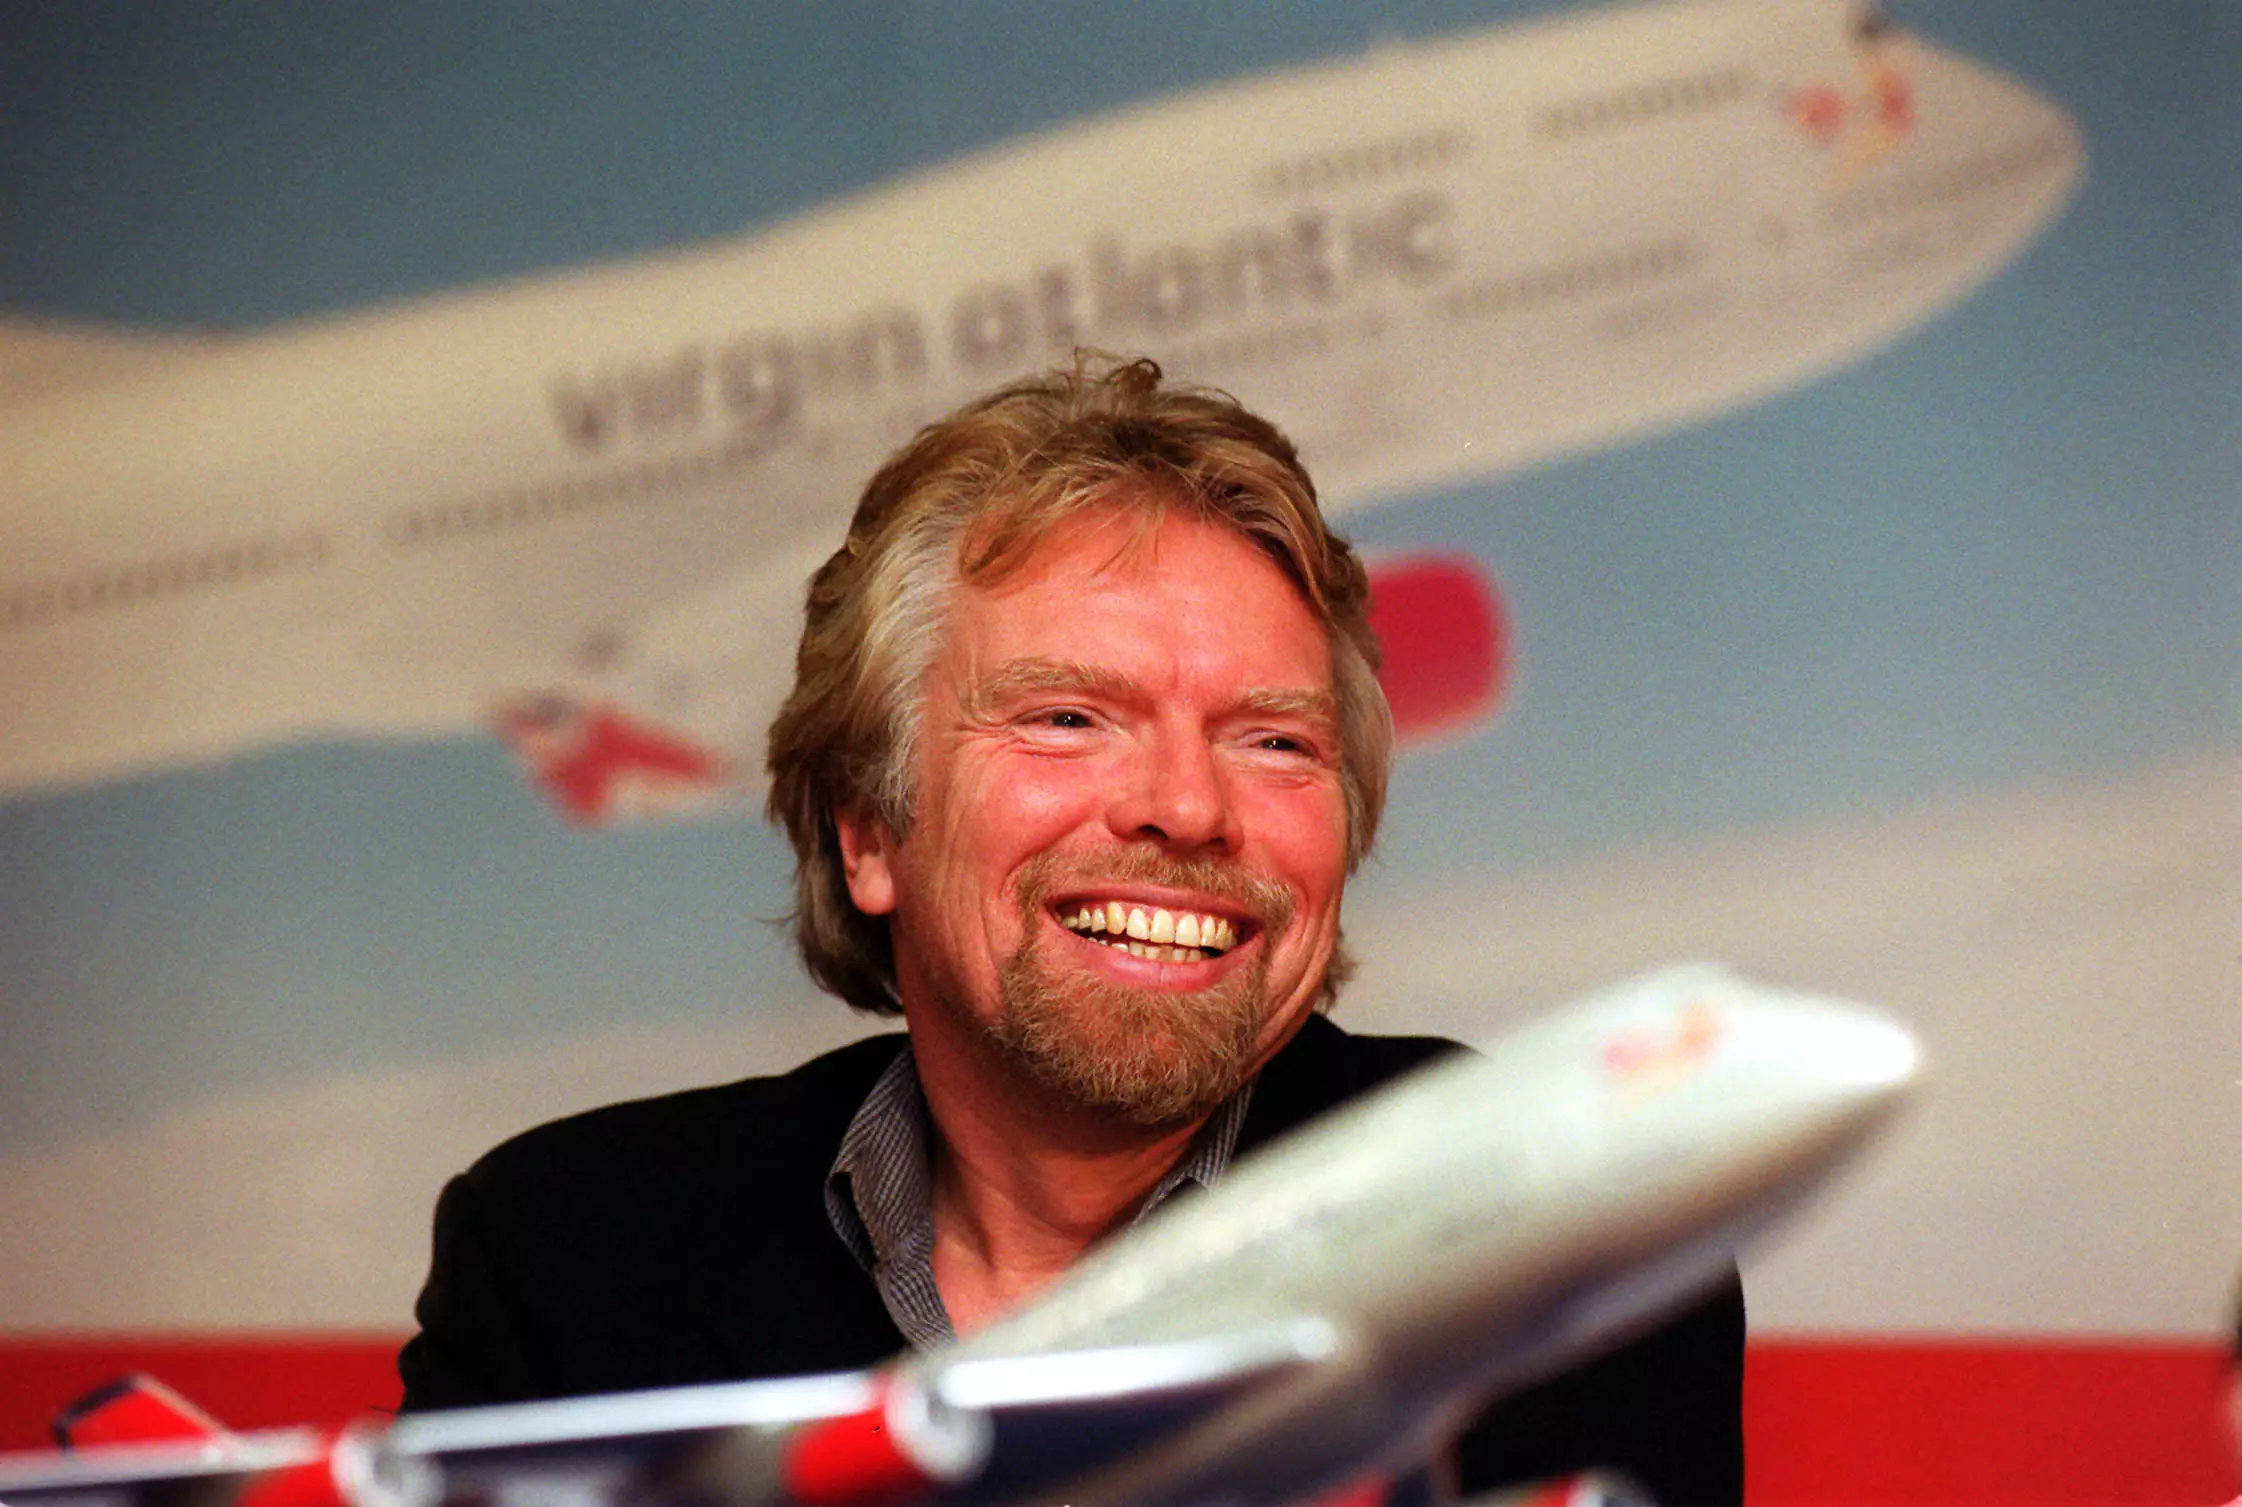 Rude Awakening For Virgin Staff Member After Richard Branson Surprises Him